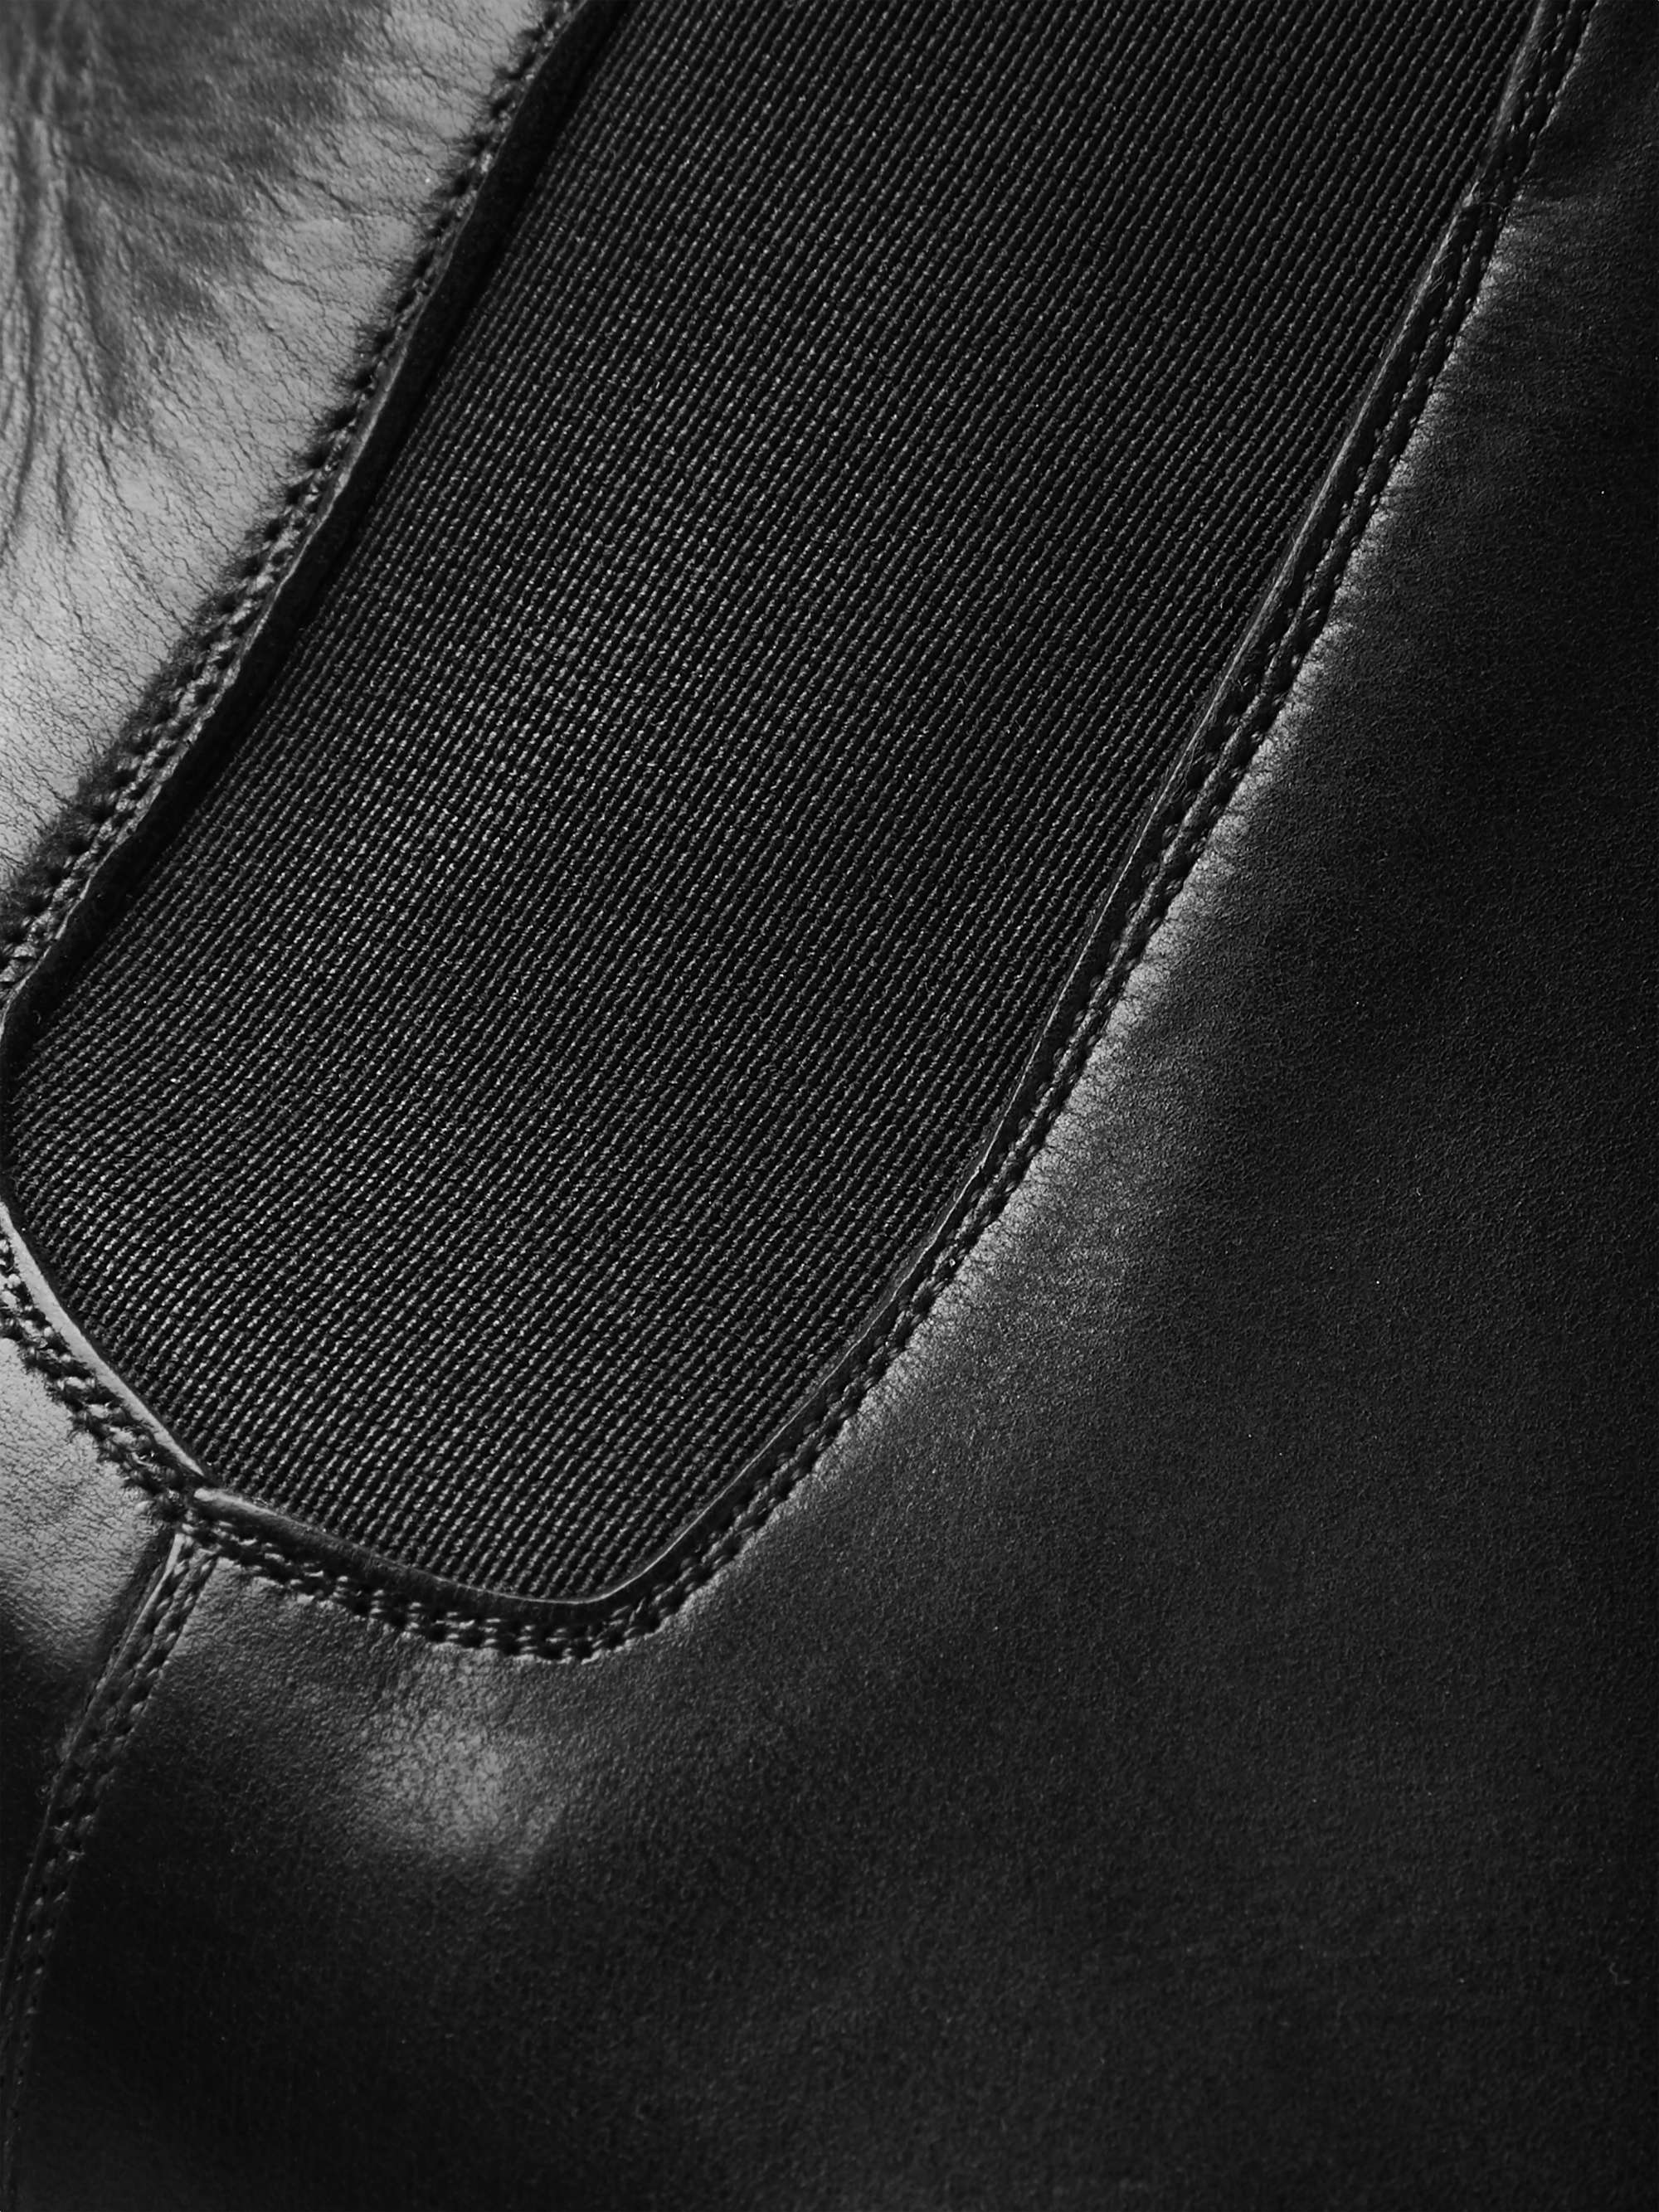 CELINE HOMME Leather Chelsea Boots | MR PORTER